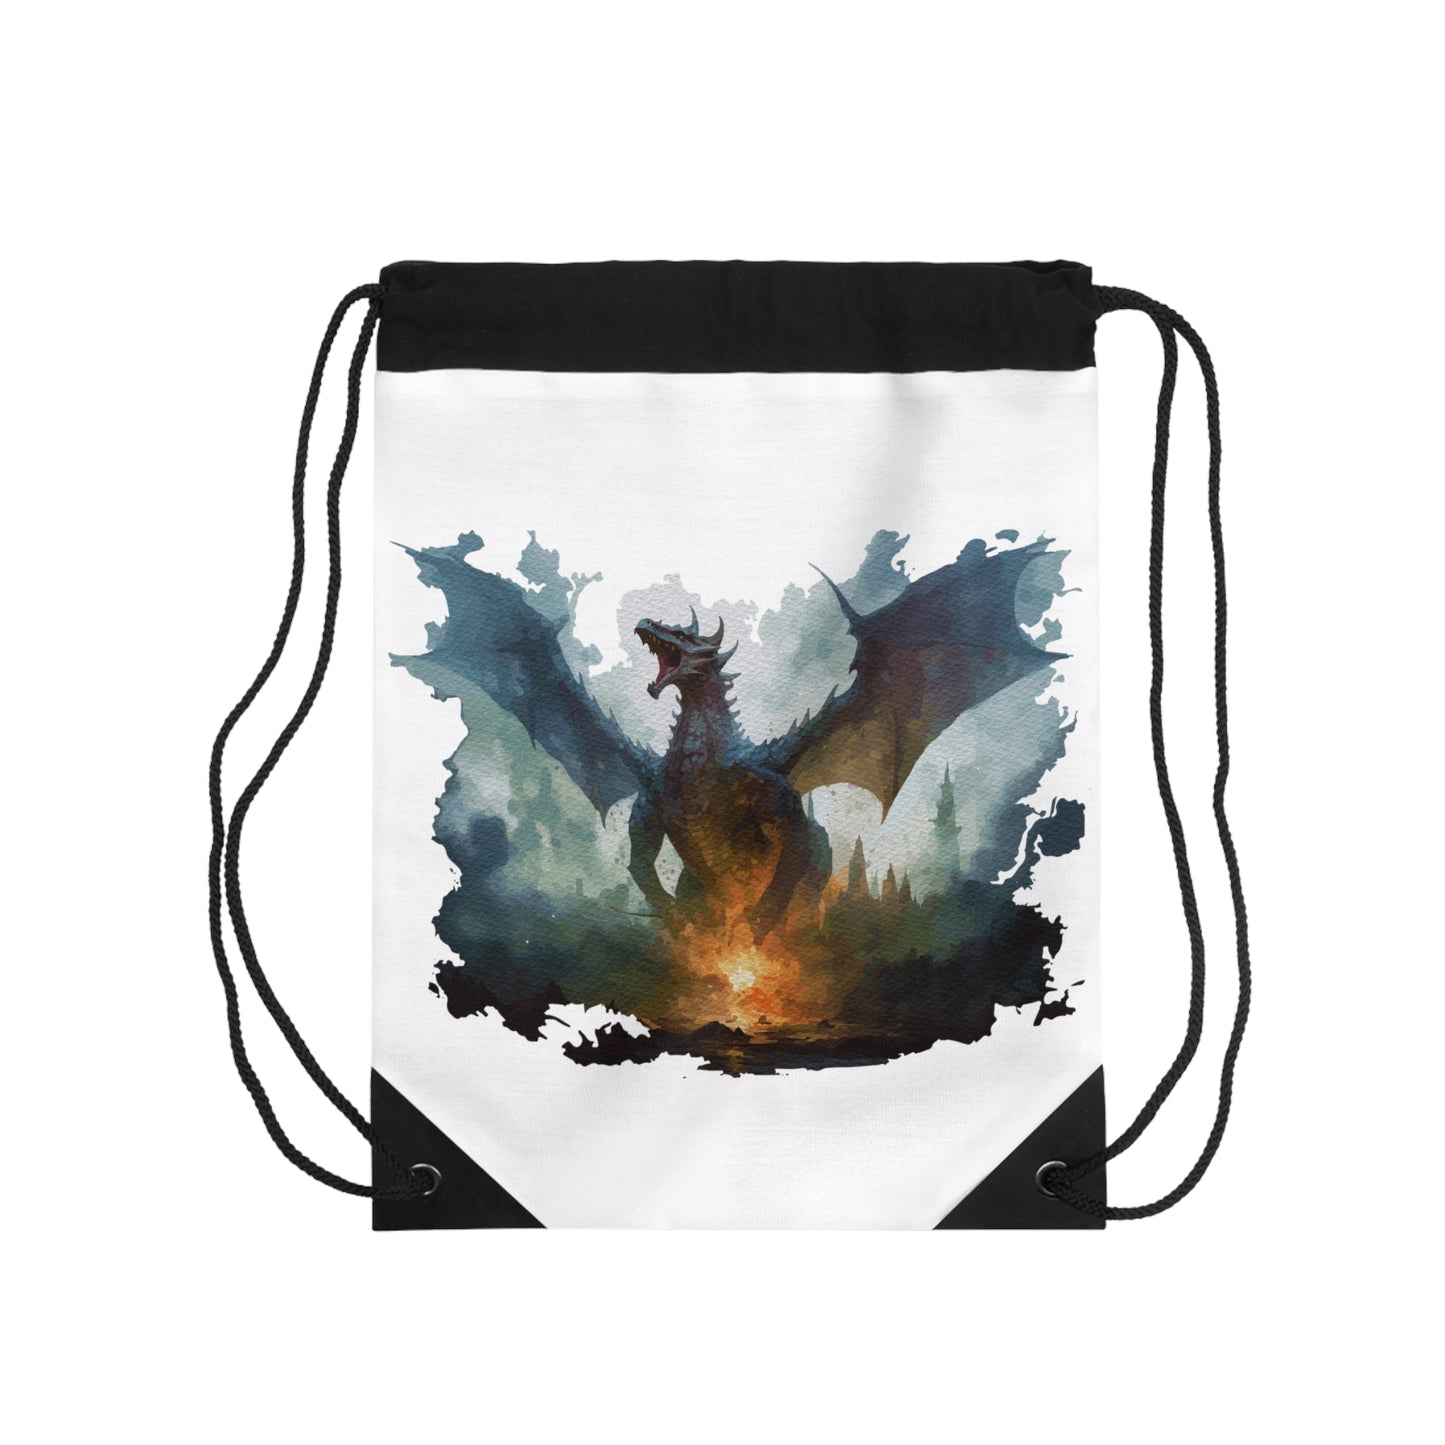 Drawstring Bag - Roaring Dragon Drawstring Bag, Zipper Pocket Inside